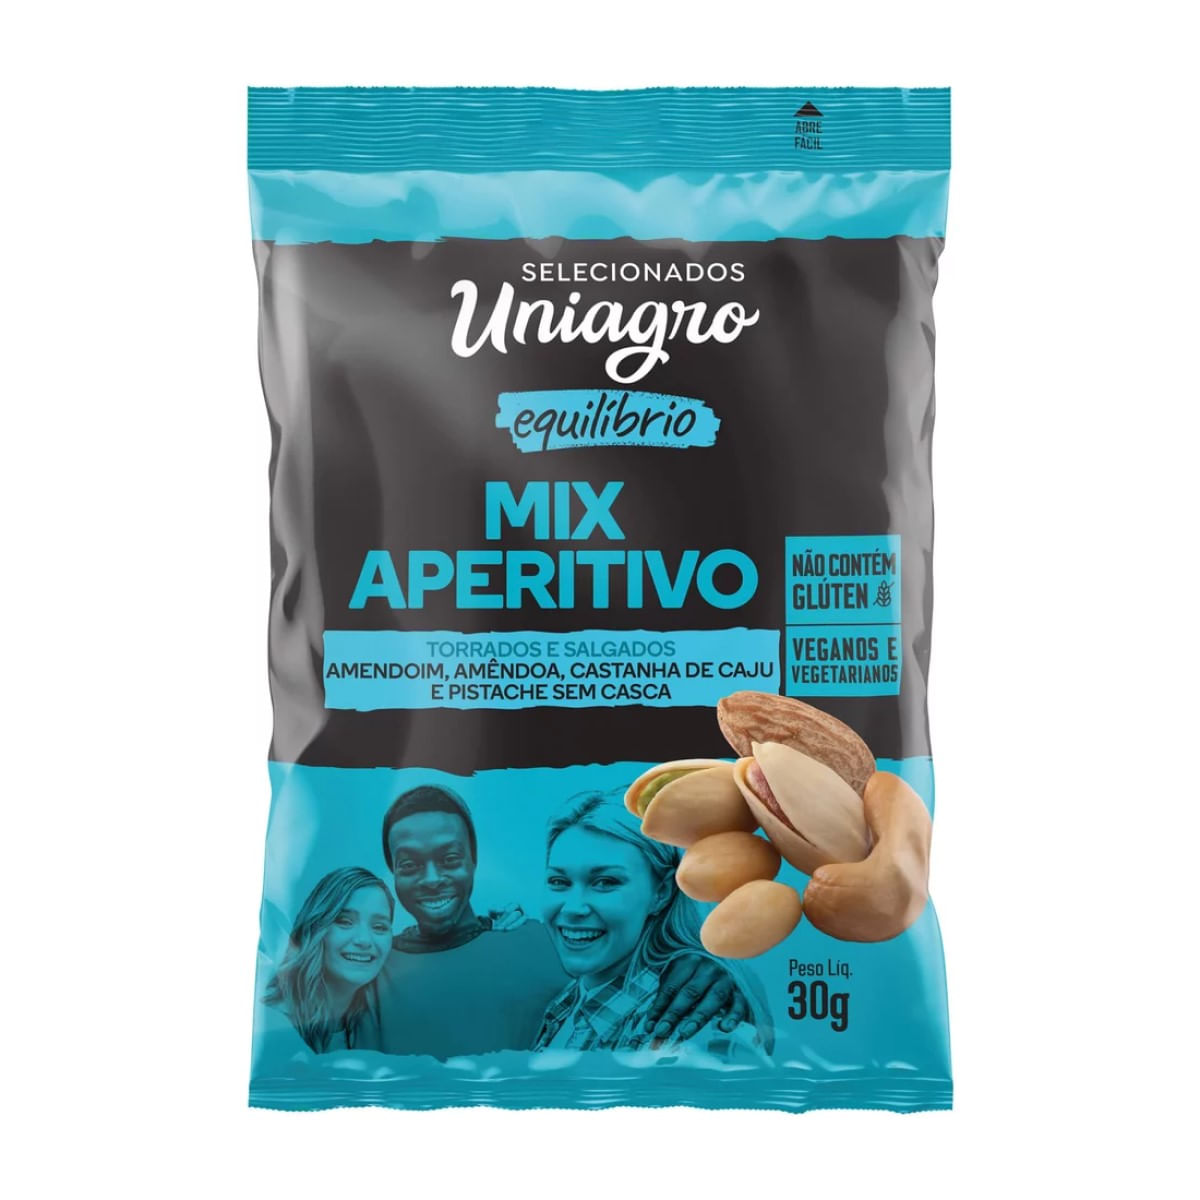 mix-aperitivo-vegano-uniagro-30g-1.jpg